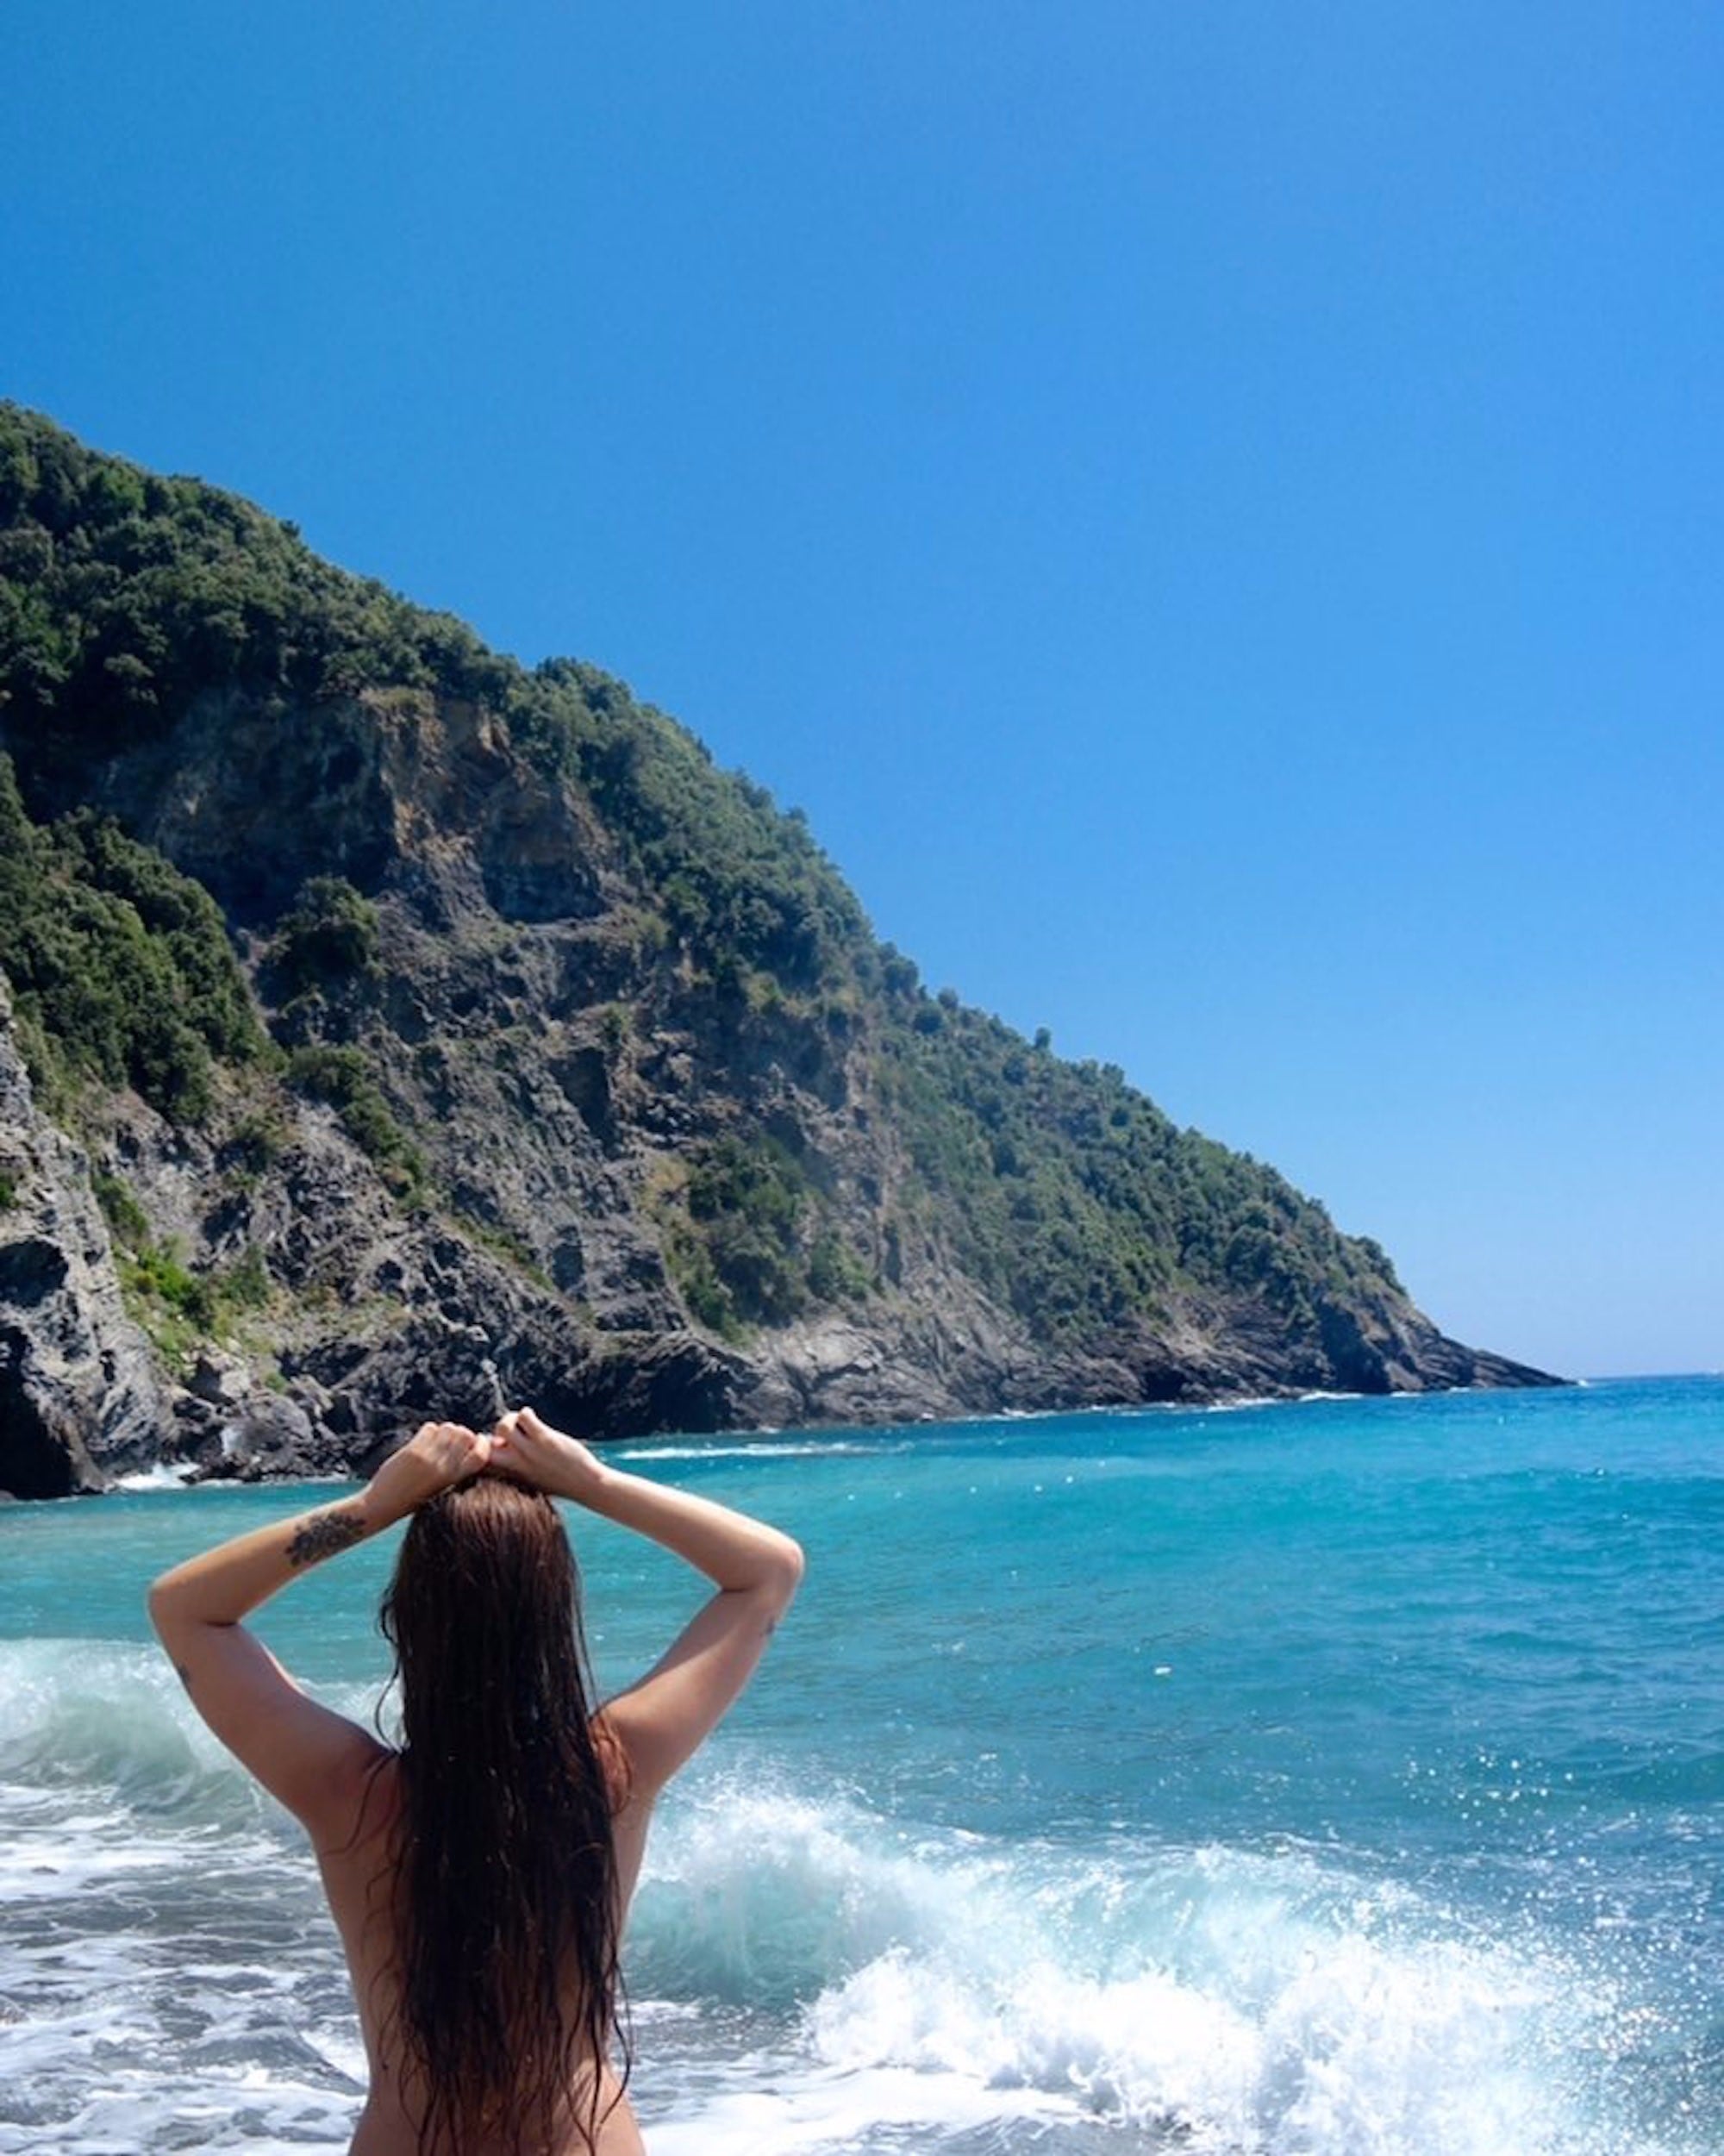 Nudest Beach Cozumel - Hidden Nude Beach in Cinque Terre, Italy | POPSUGAR Smart Living